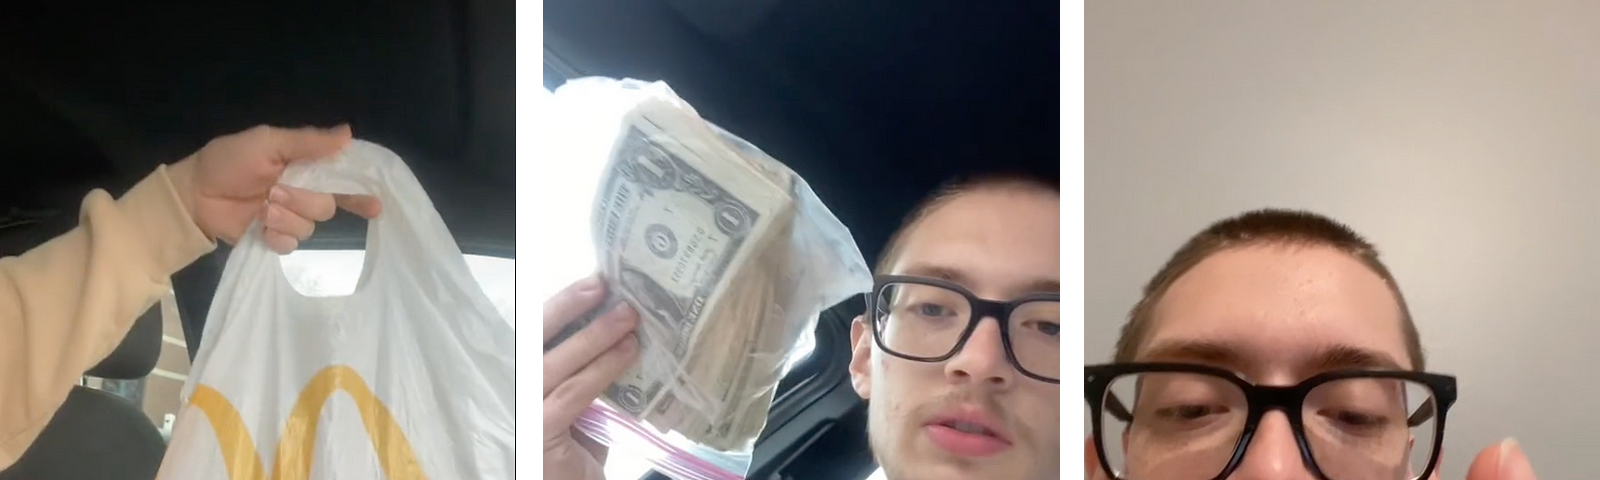 Man finding money